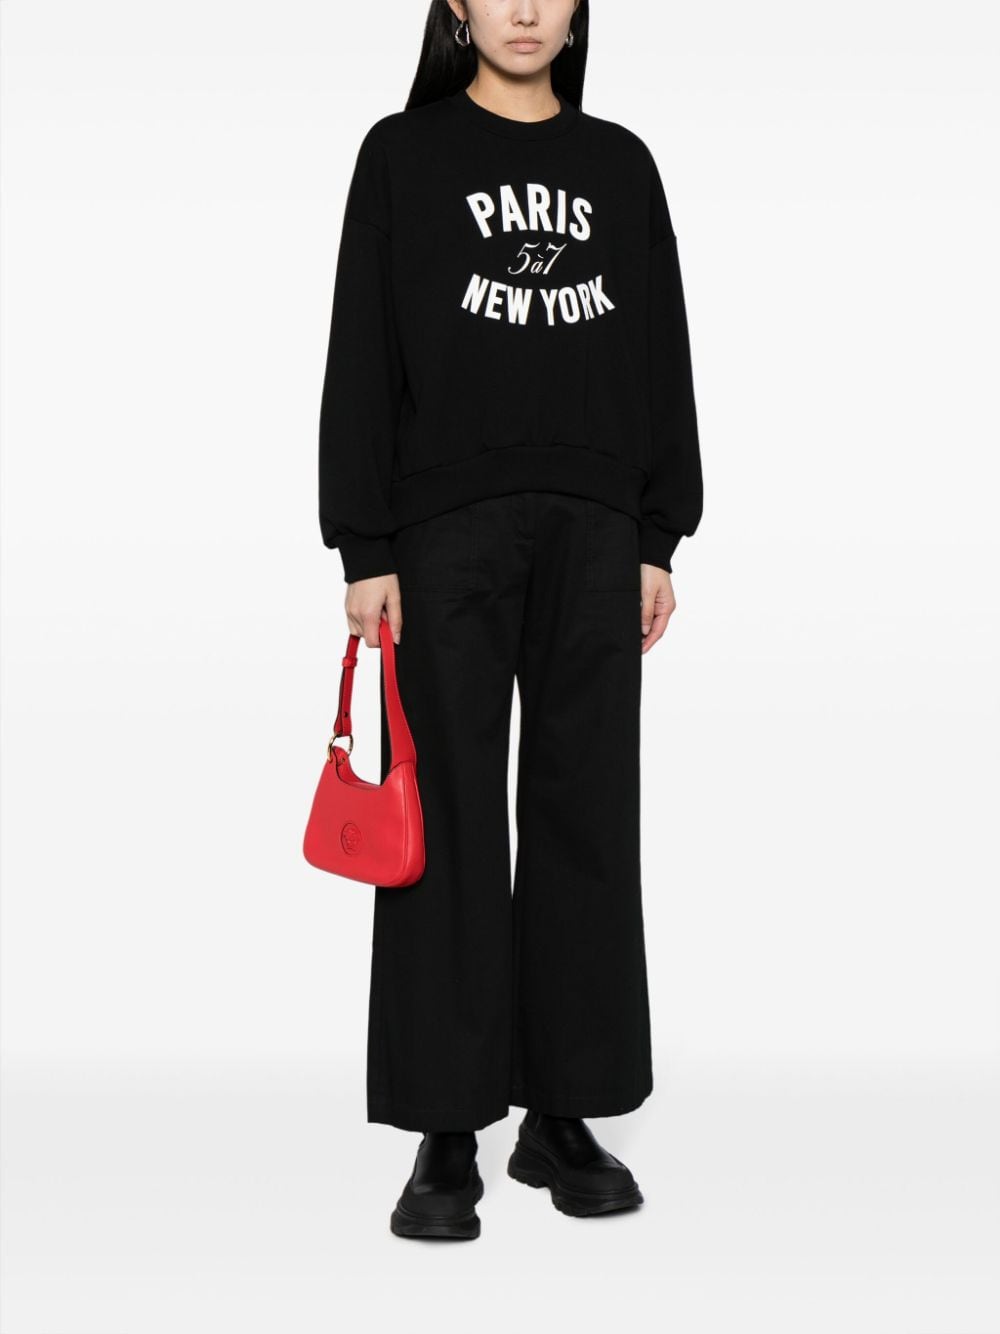 Image 2 of Cinq A Sept Brandy Paris New York sweatshirt